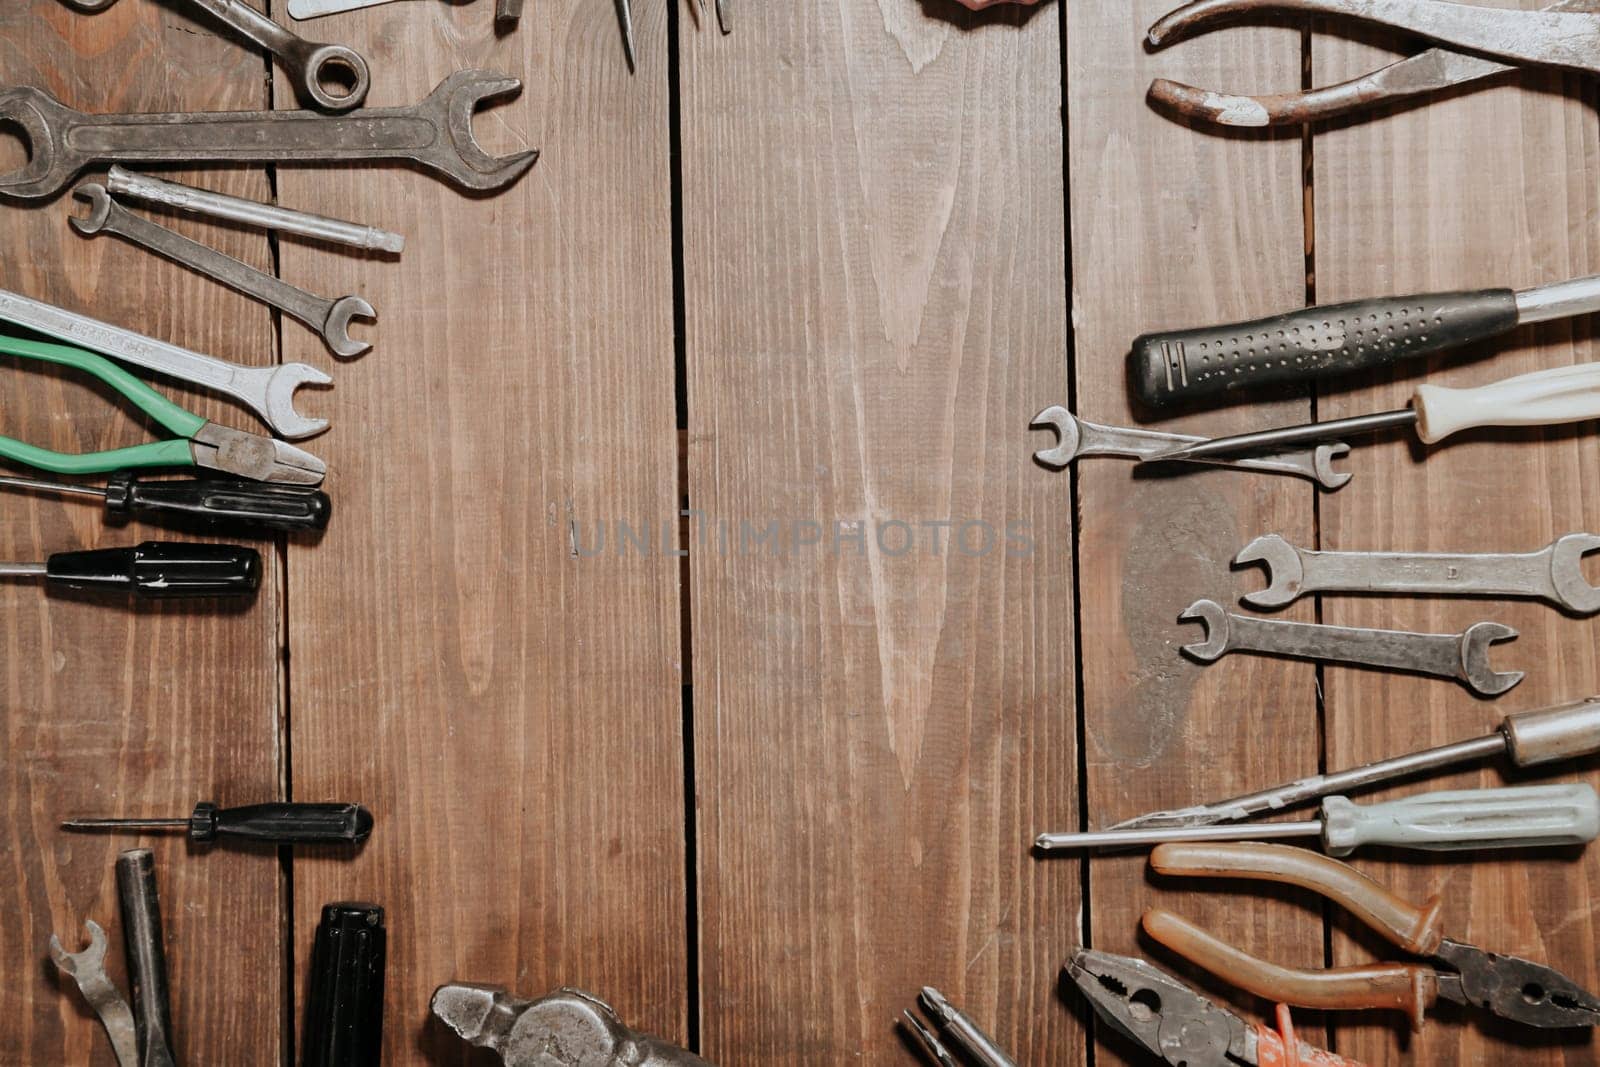 tools for repair knives hammers keys pliers by Simakov